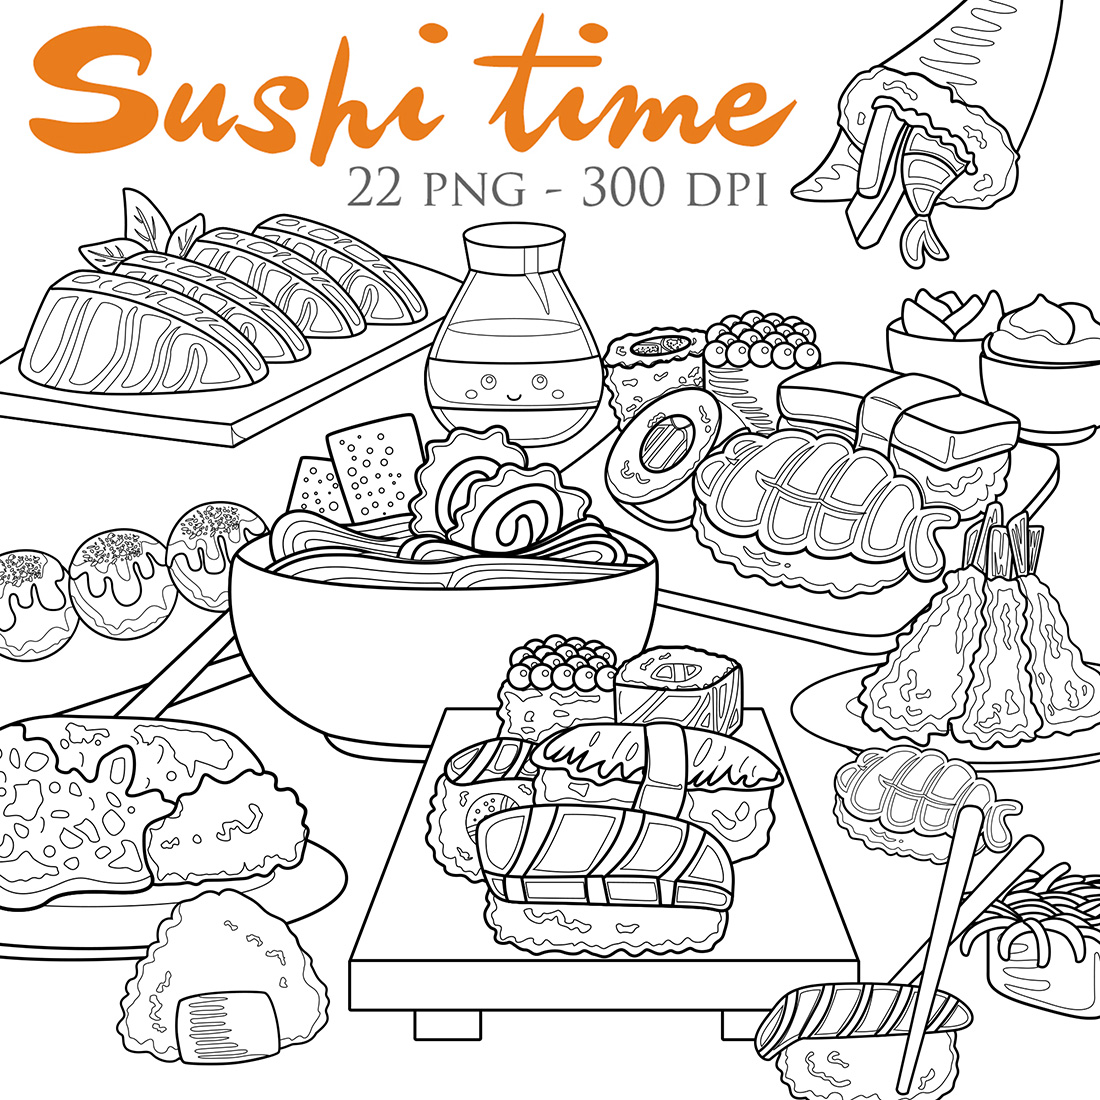 Japanese Sushi Food & Drink Coloring Set Graphic by Peekadillie